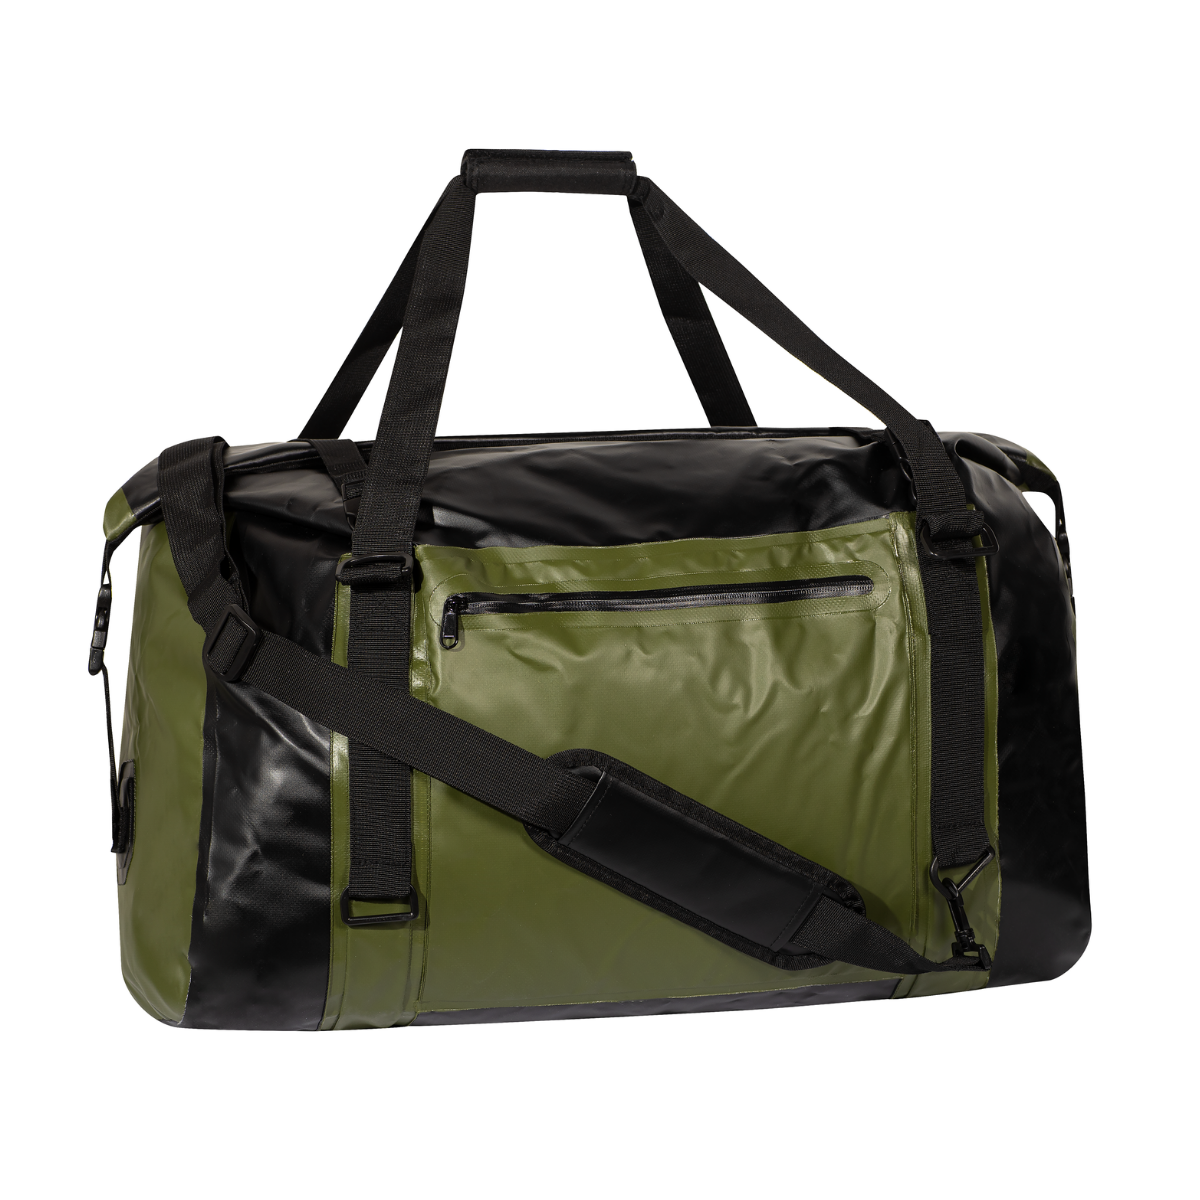 Waterproof Roll-Top Dry Duffel Bag (60L) – COR Surf